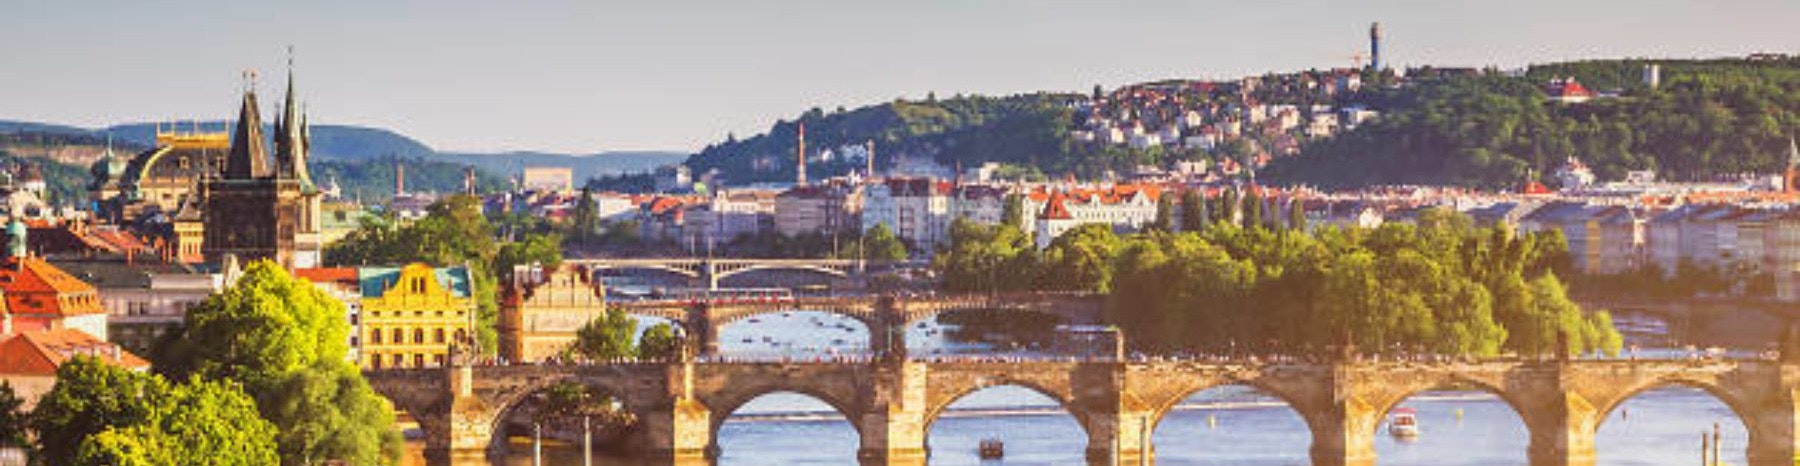 Cover image of HR22 Prague